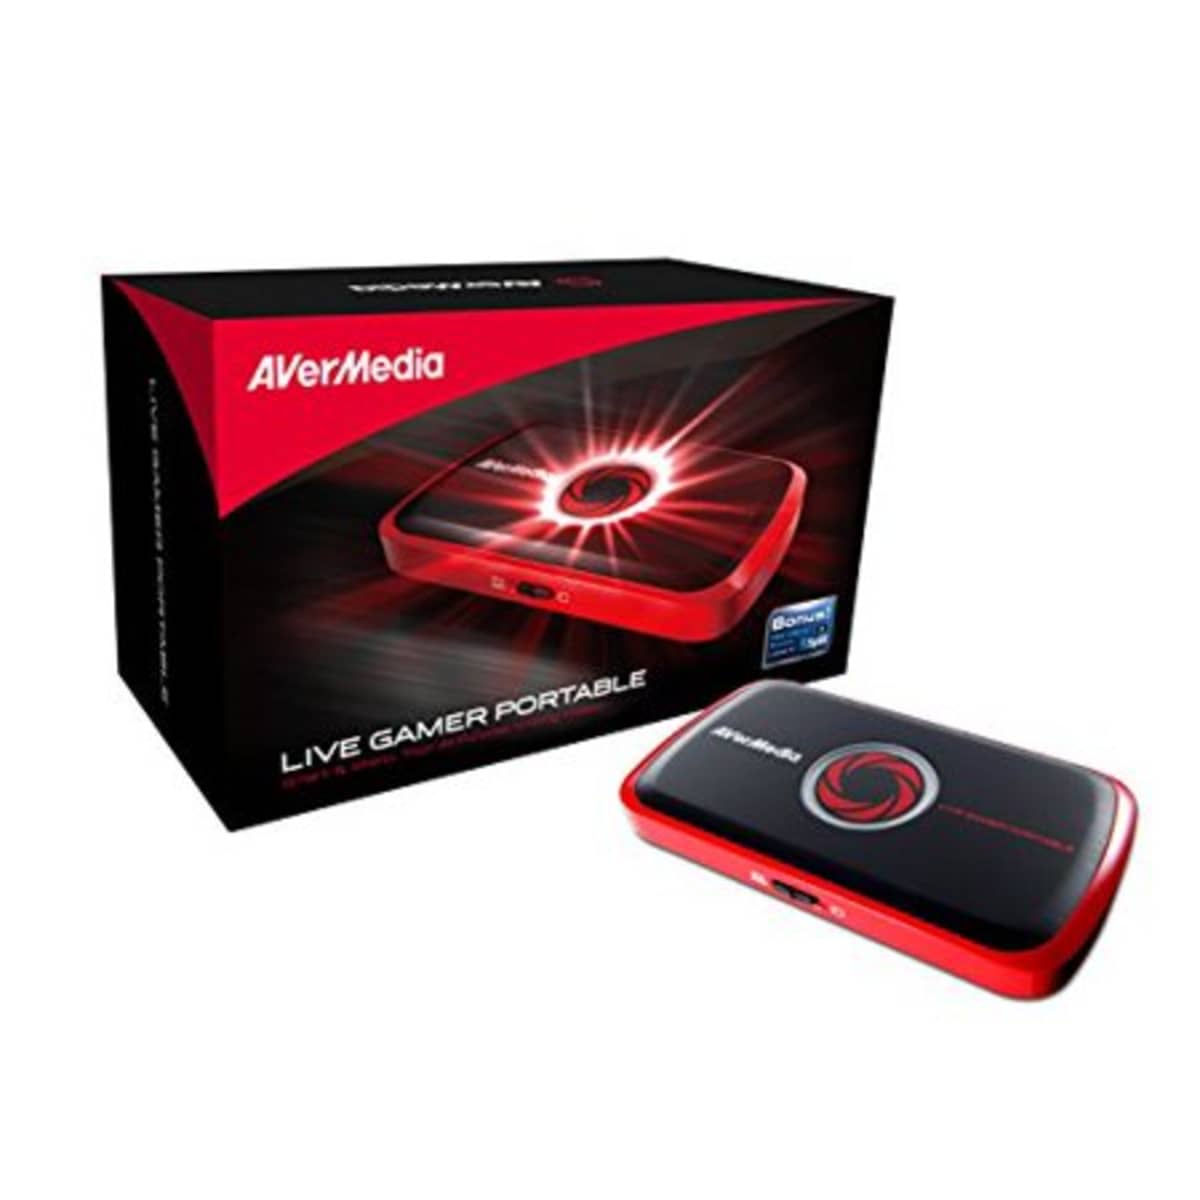 Video Capture Card Review: Avermedia Live Gamer Portable - TurboFuture